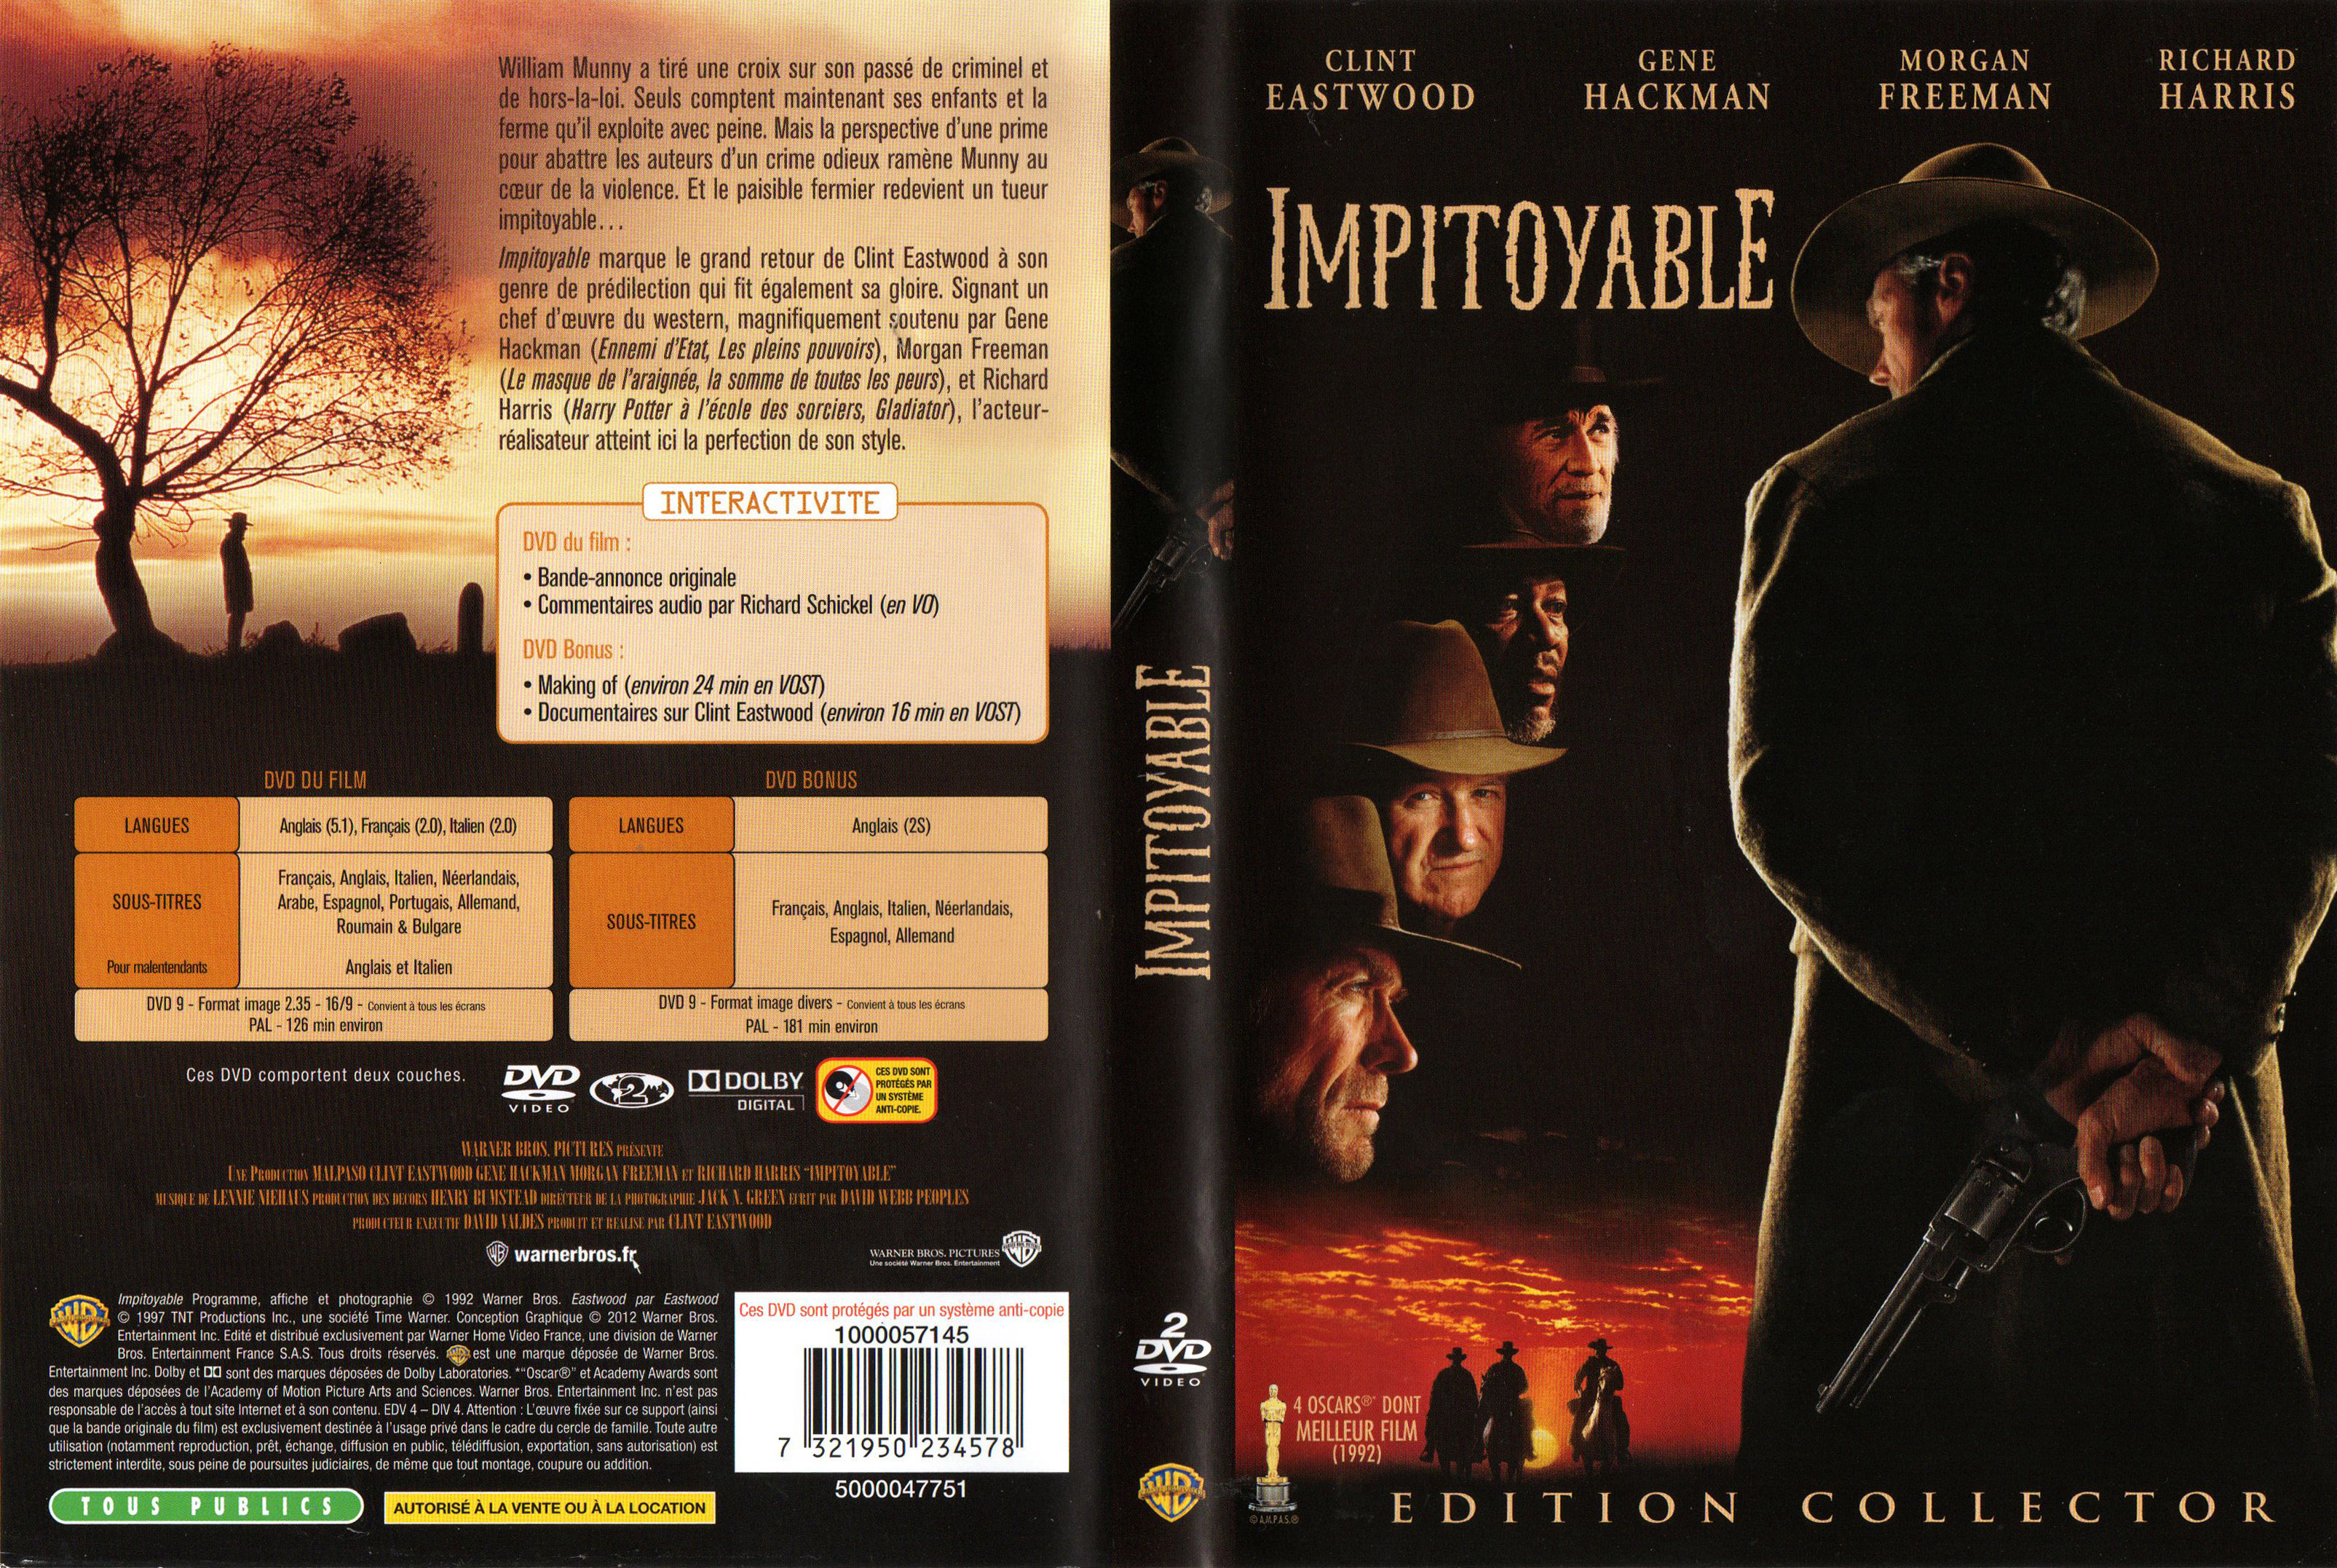 Jaquette DVD Impitoyable v5